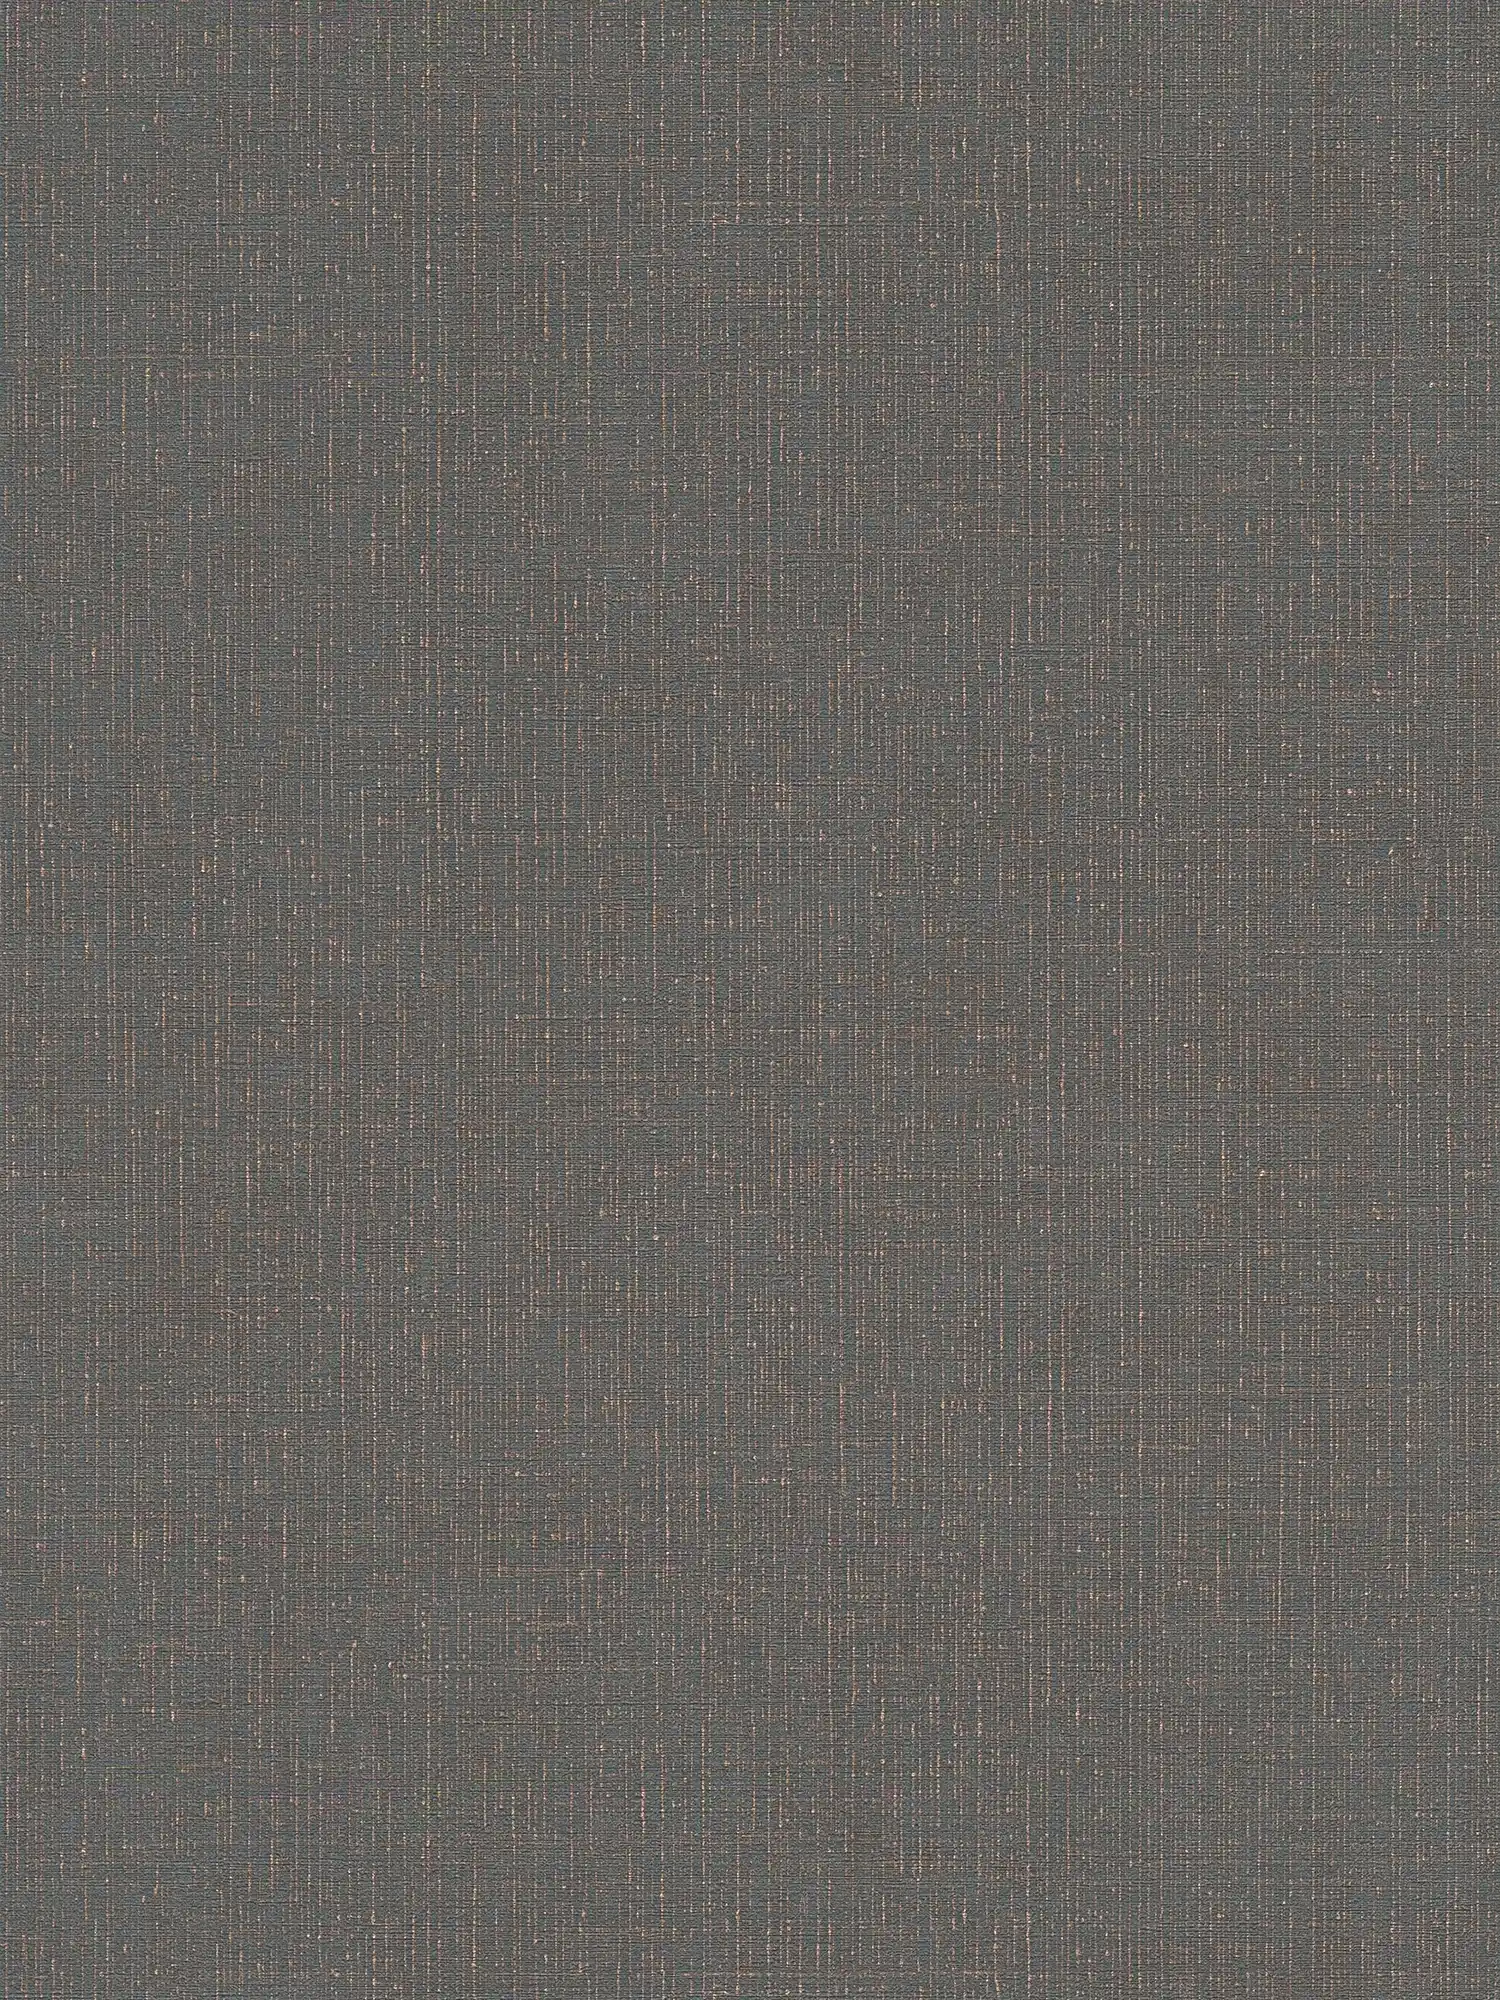 Papel pintado de aspecto textil antracita con estructura de lino - negro, gris
